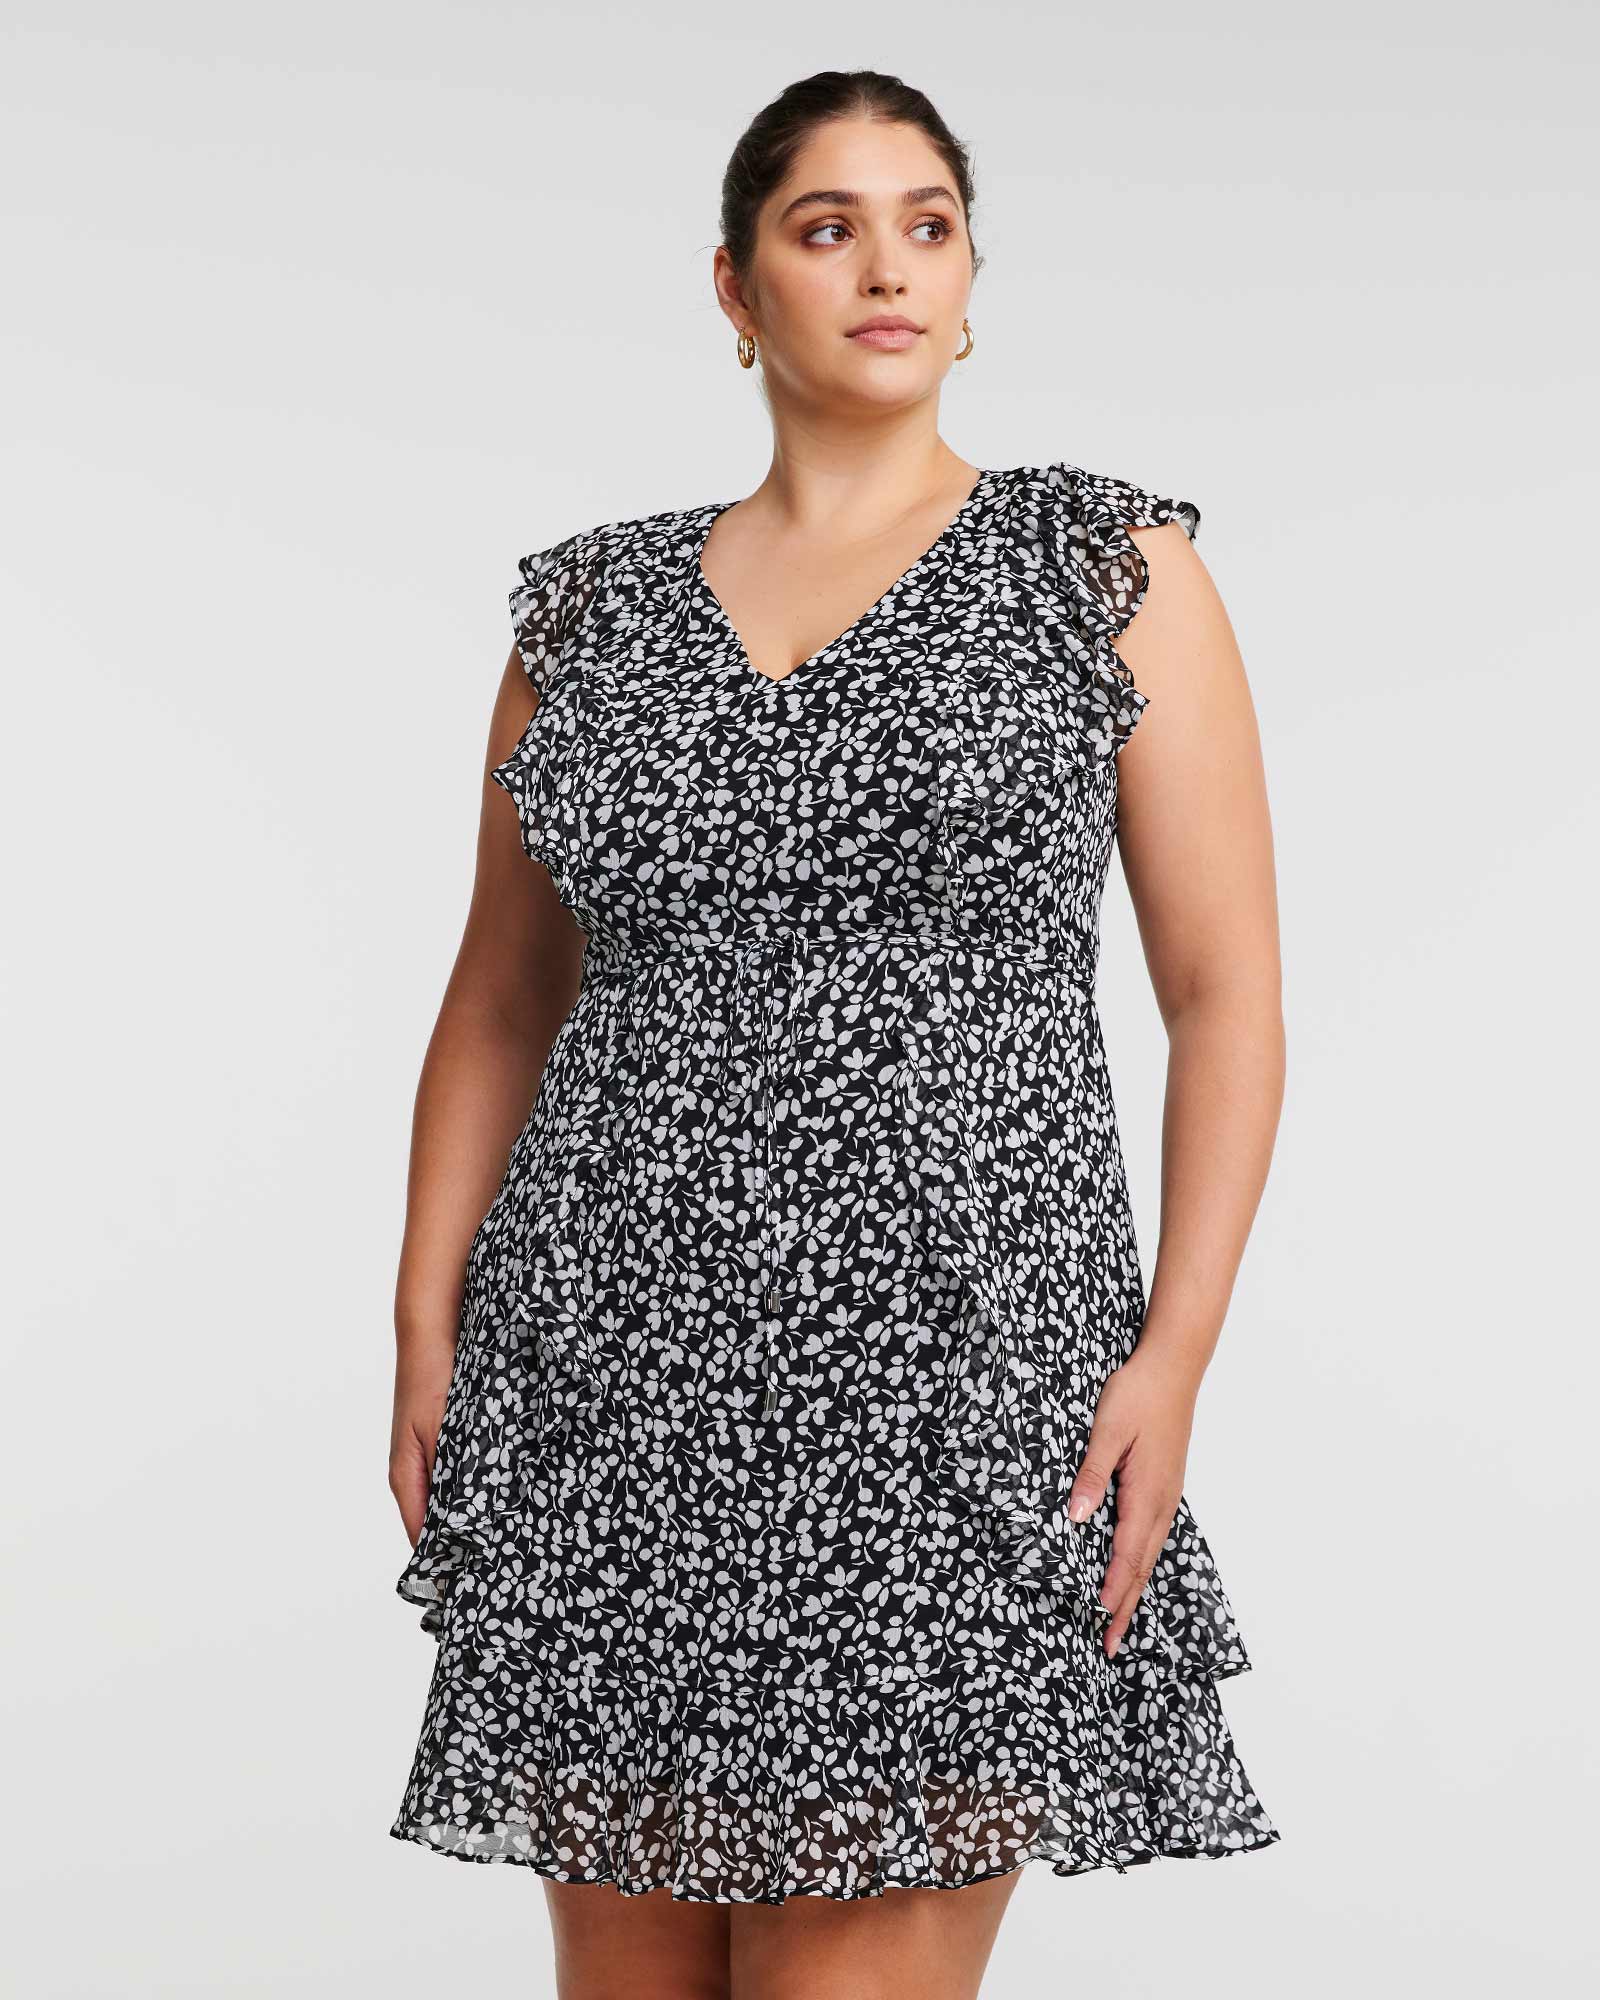 A plus size woman wearing the Olivia Black and White Ruffle Mini Dress.